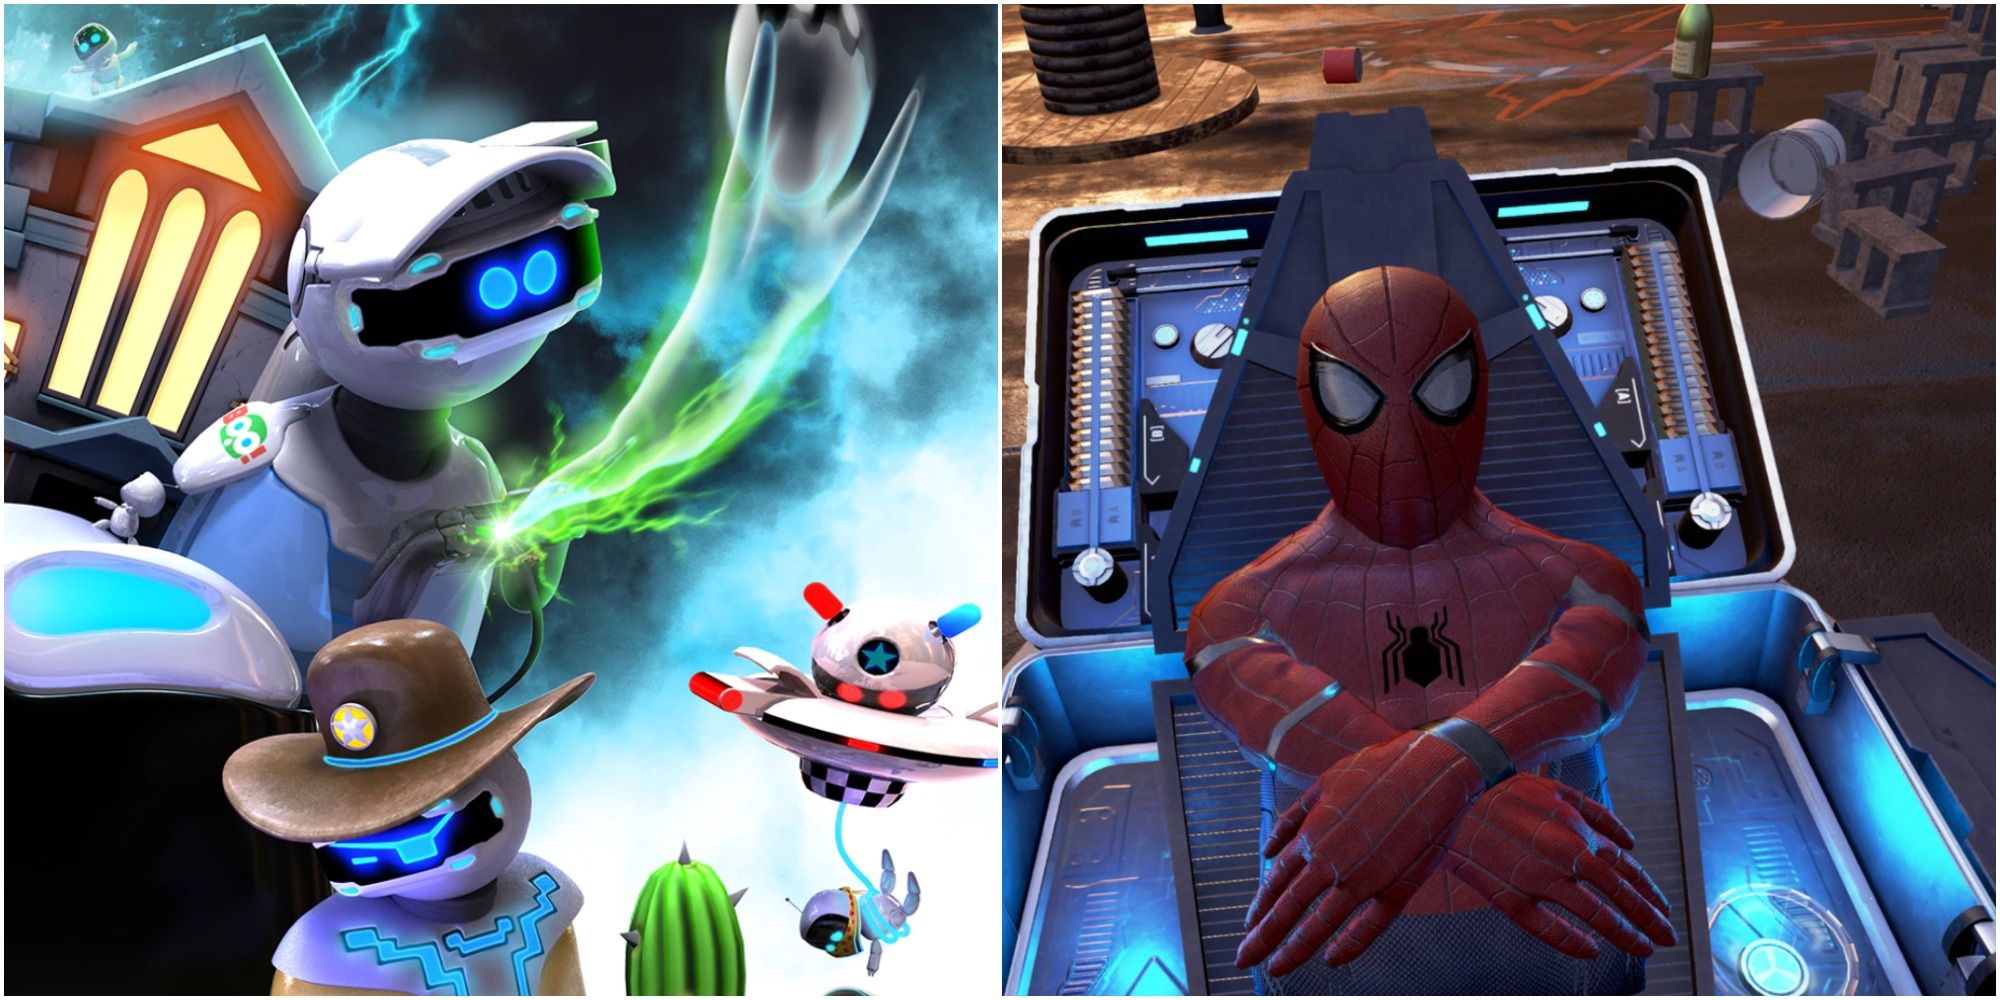 PSVR - Spiderman Homecoming and Playroom